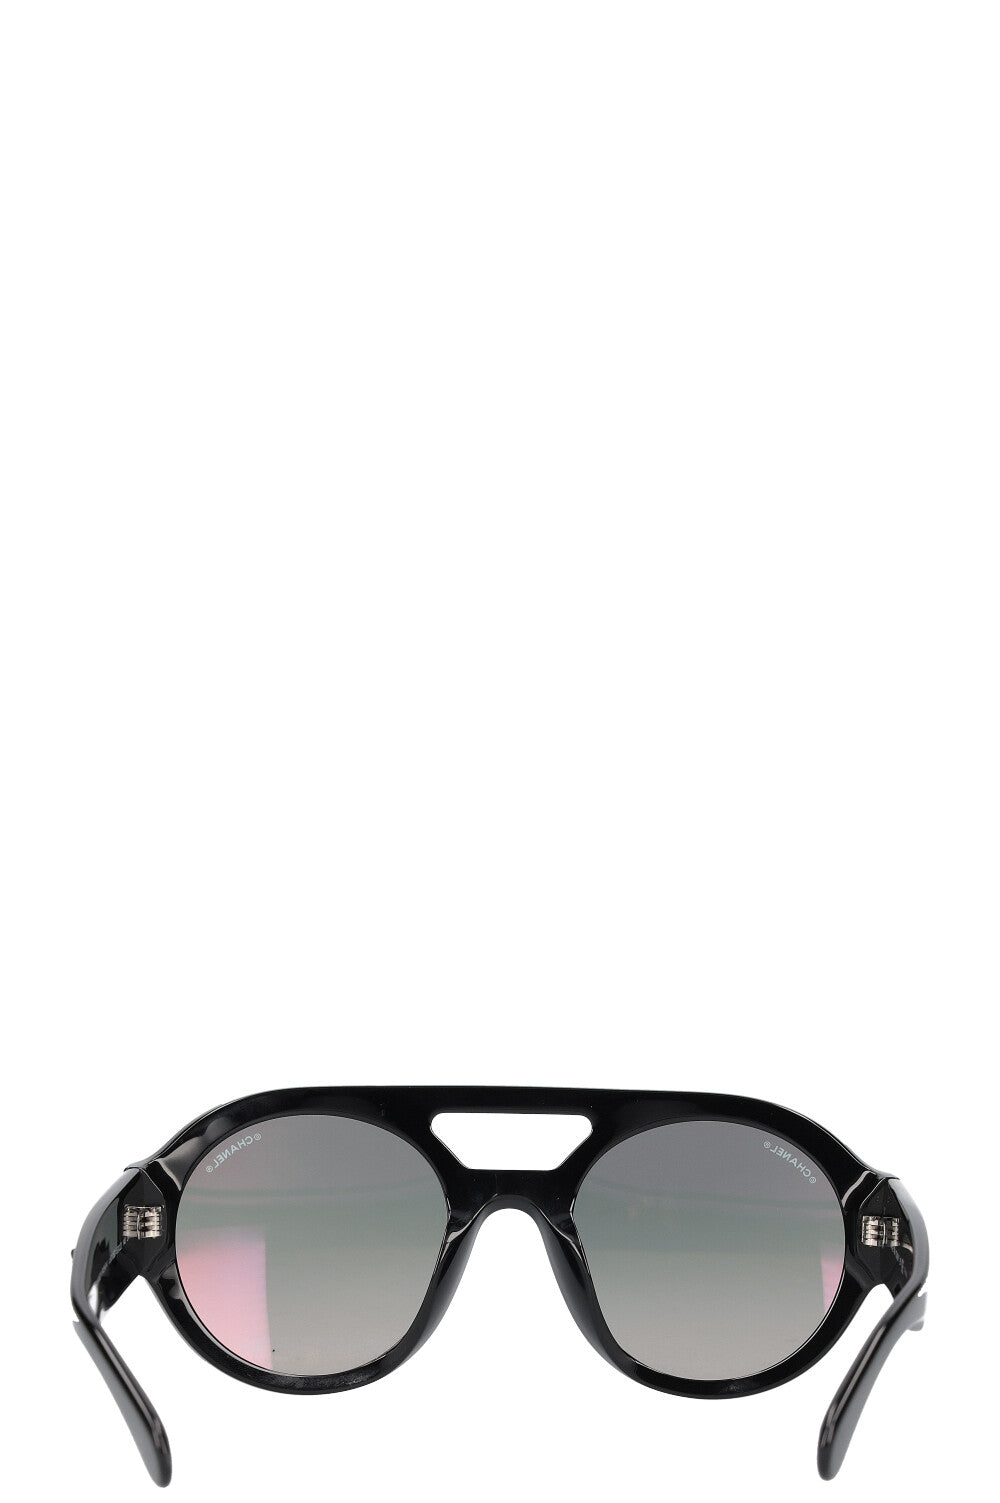 CHANEL Sunglasses 5419-B-A Black